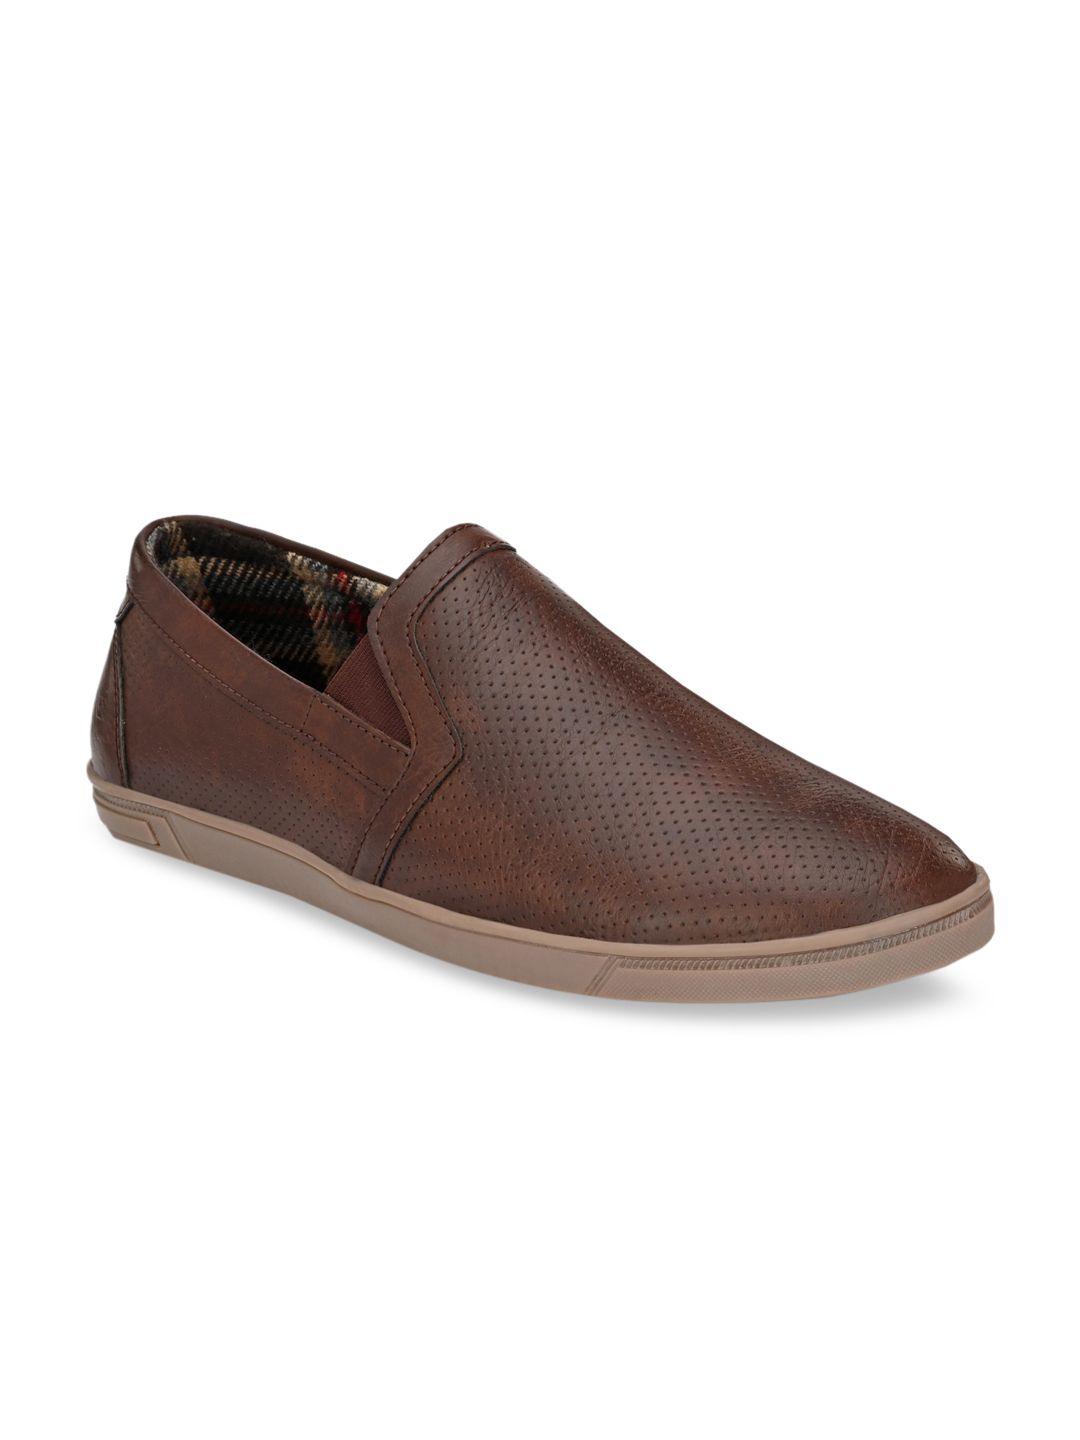 provogue-men-brown-slip-on-sneakers